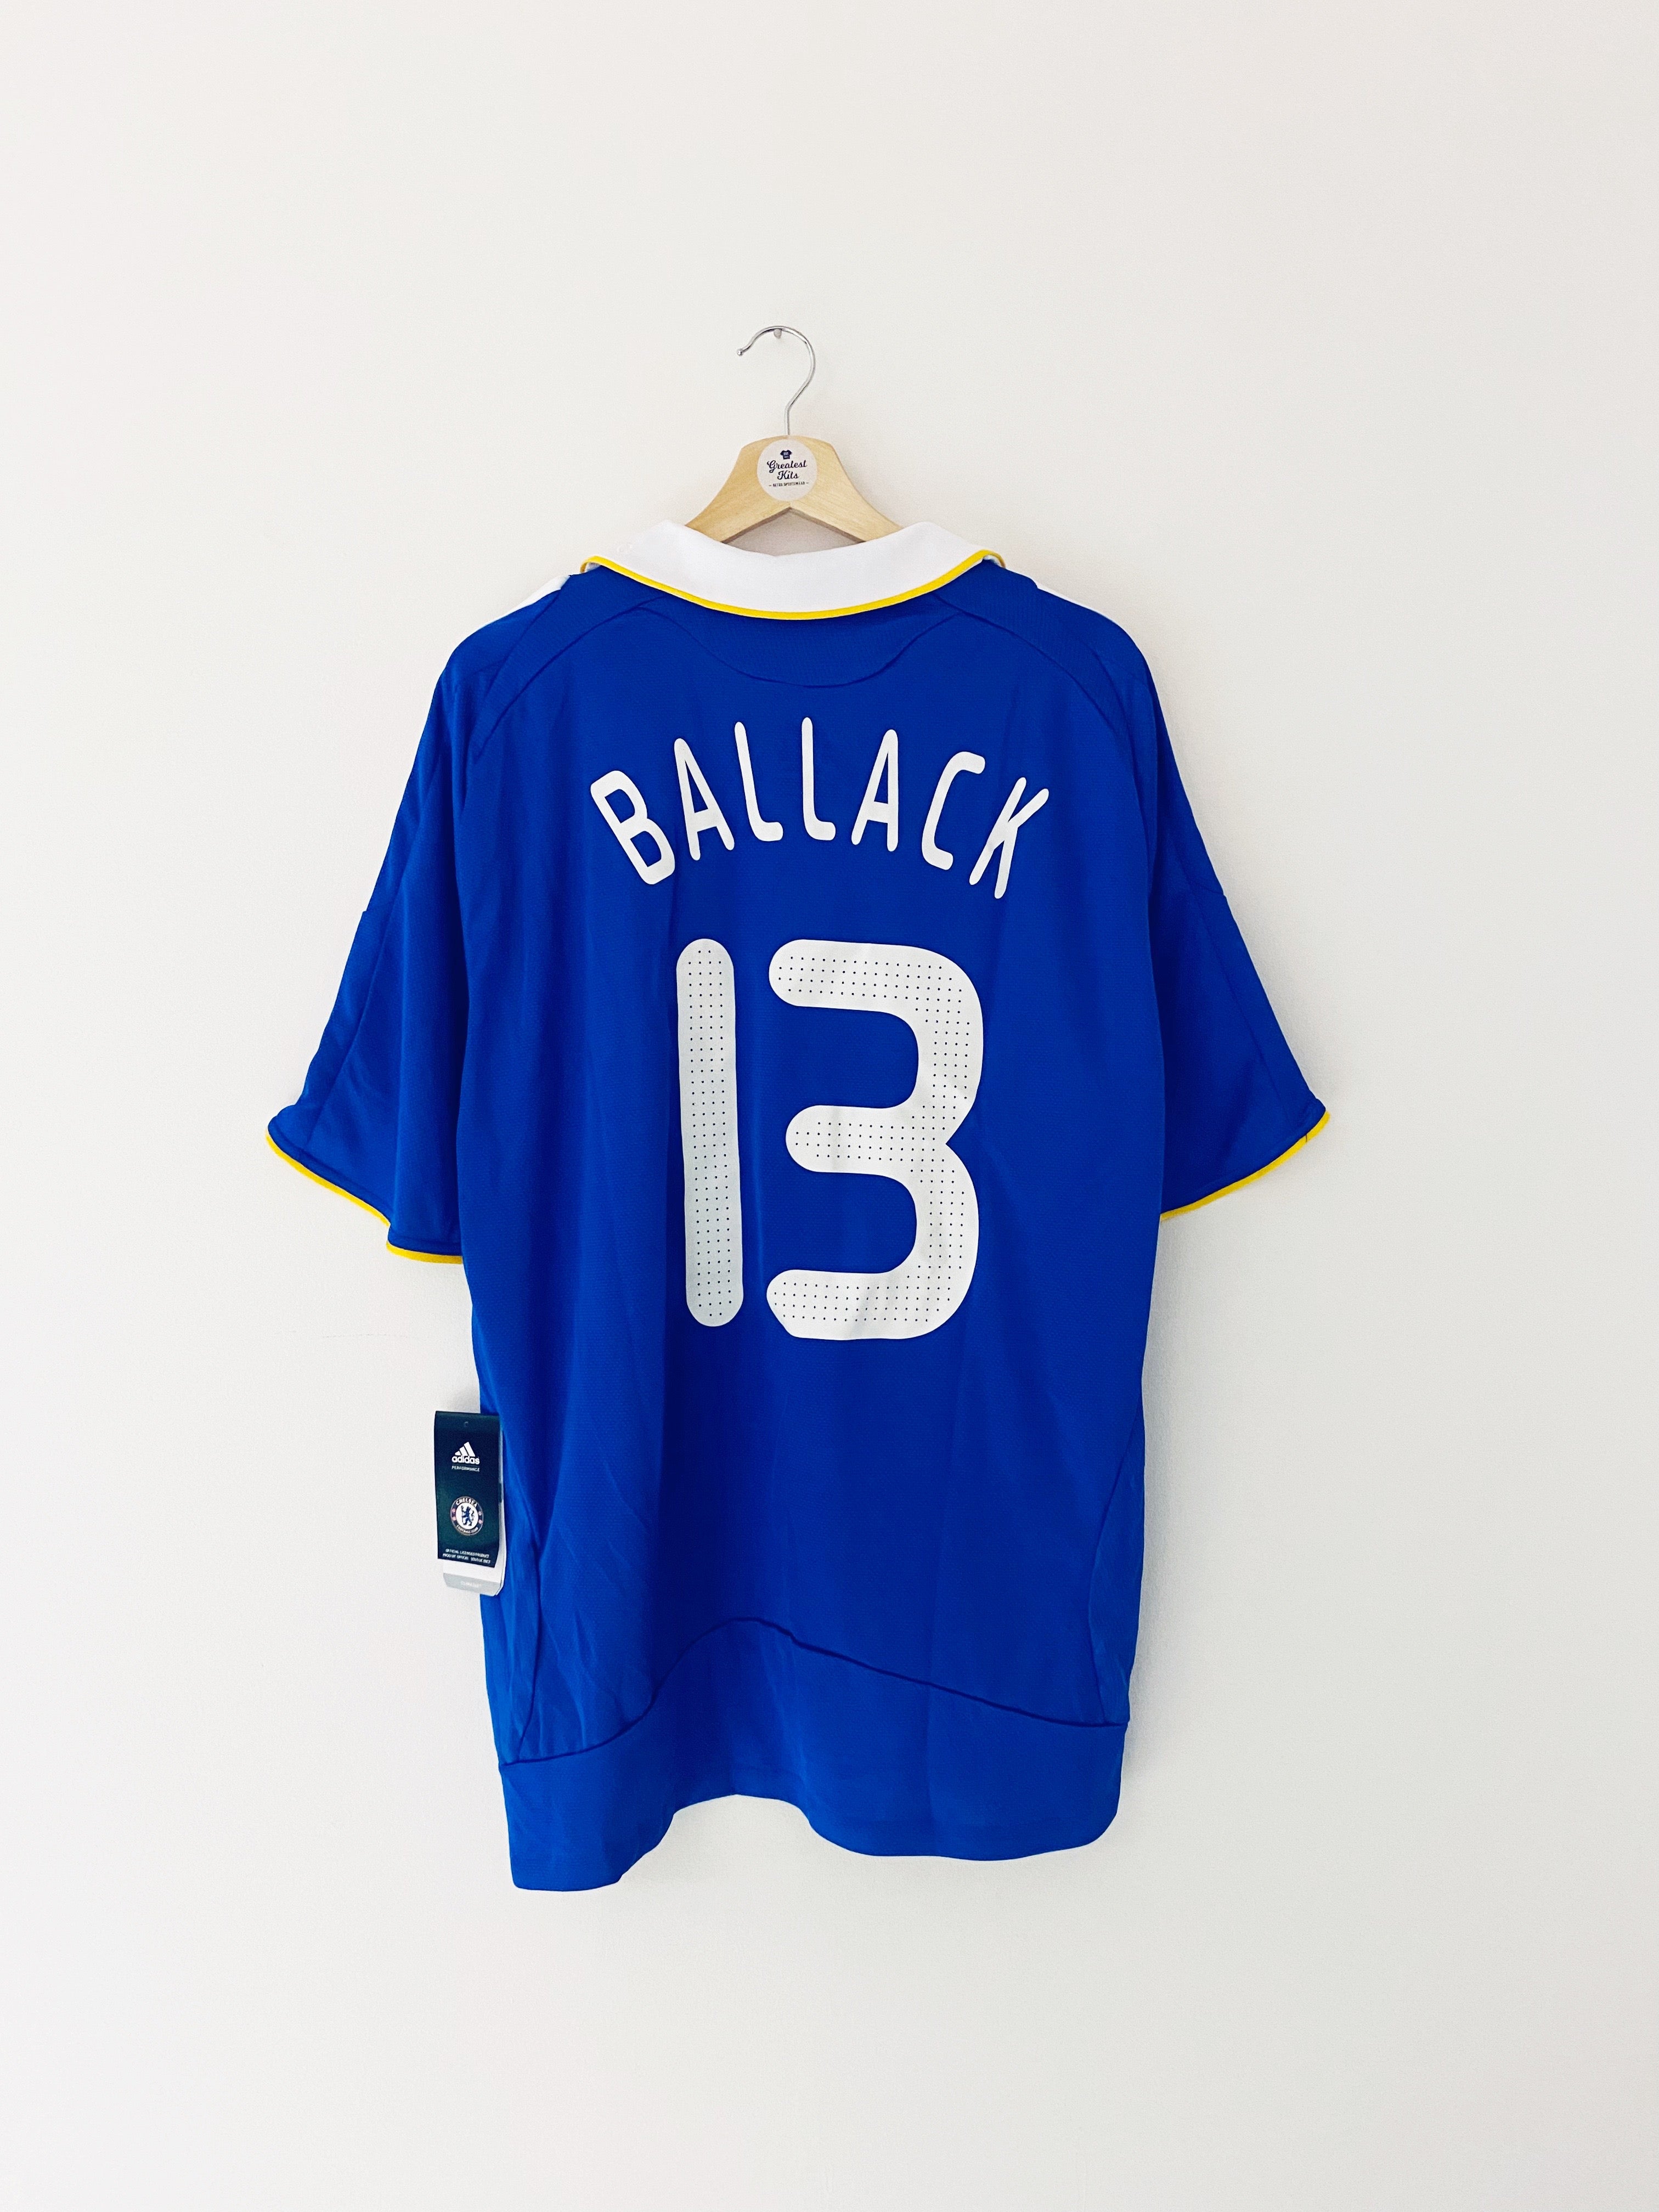 Maillot domicile Chelsea 2008/09 Ballack #13 (XL) BNWT